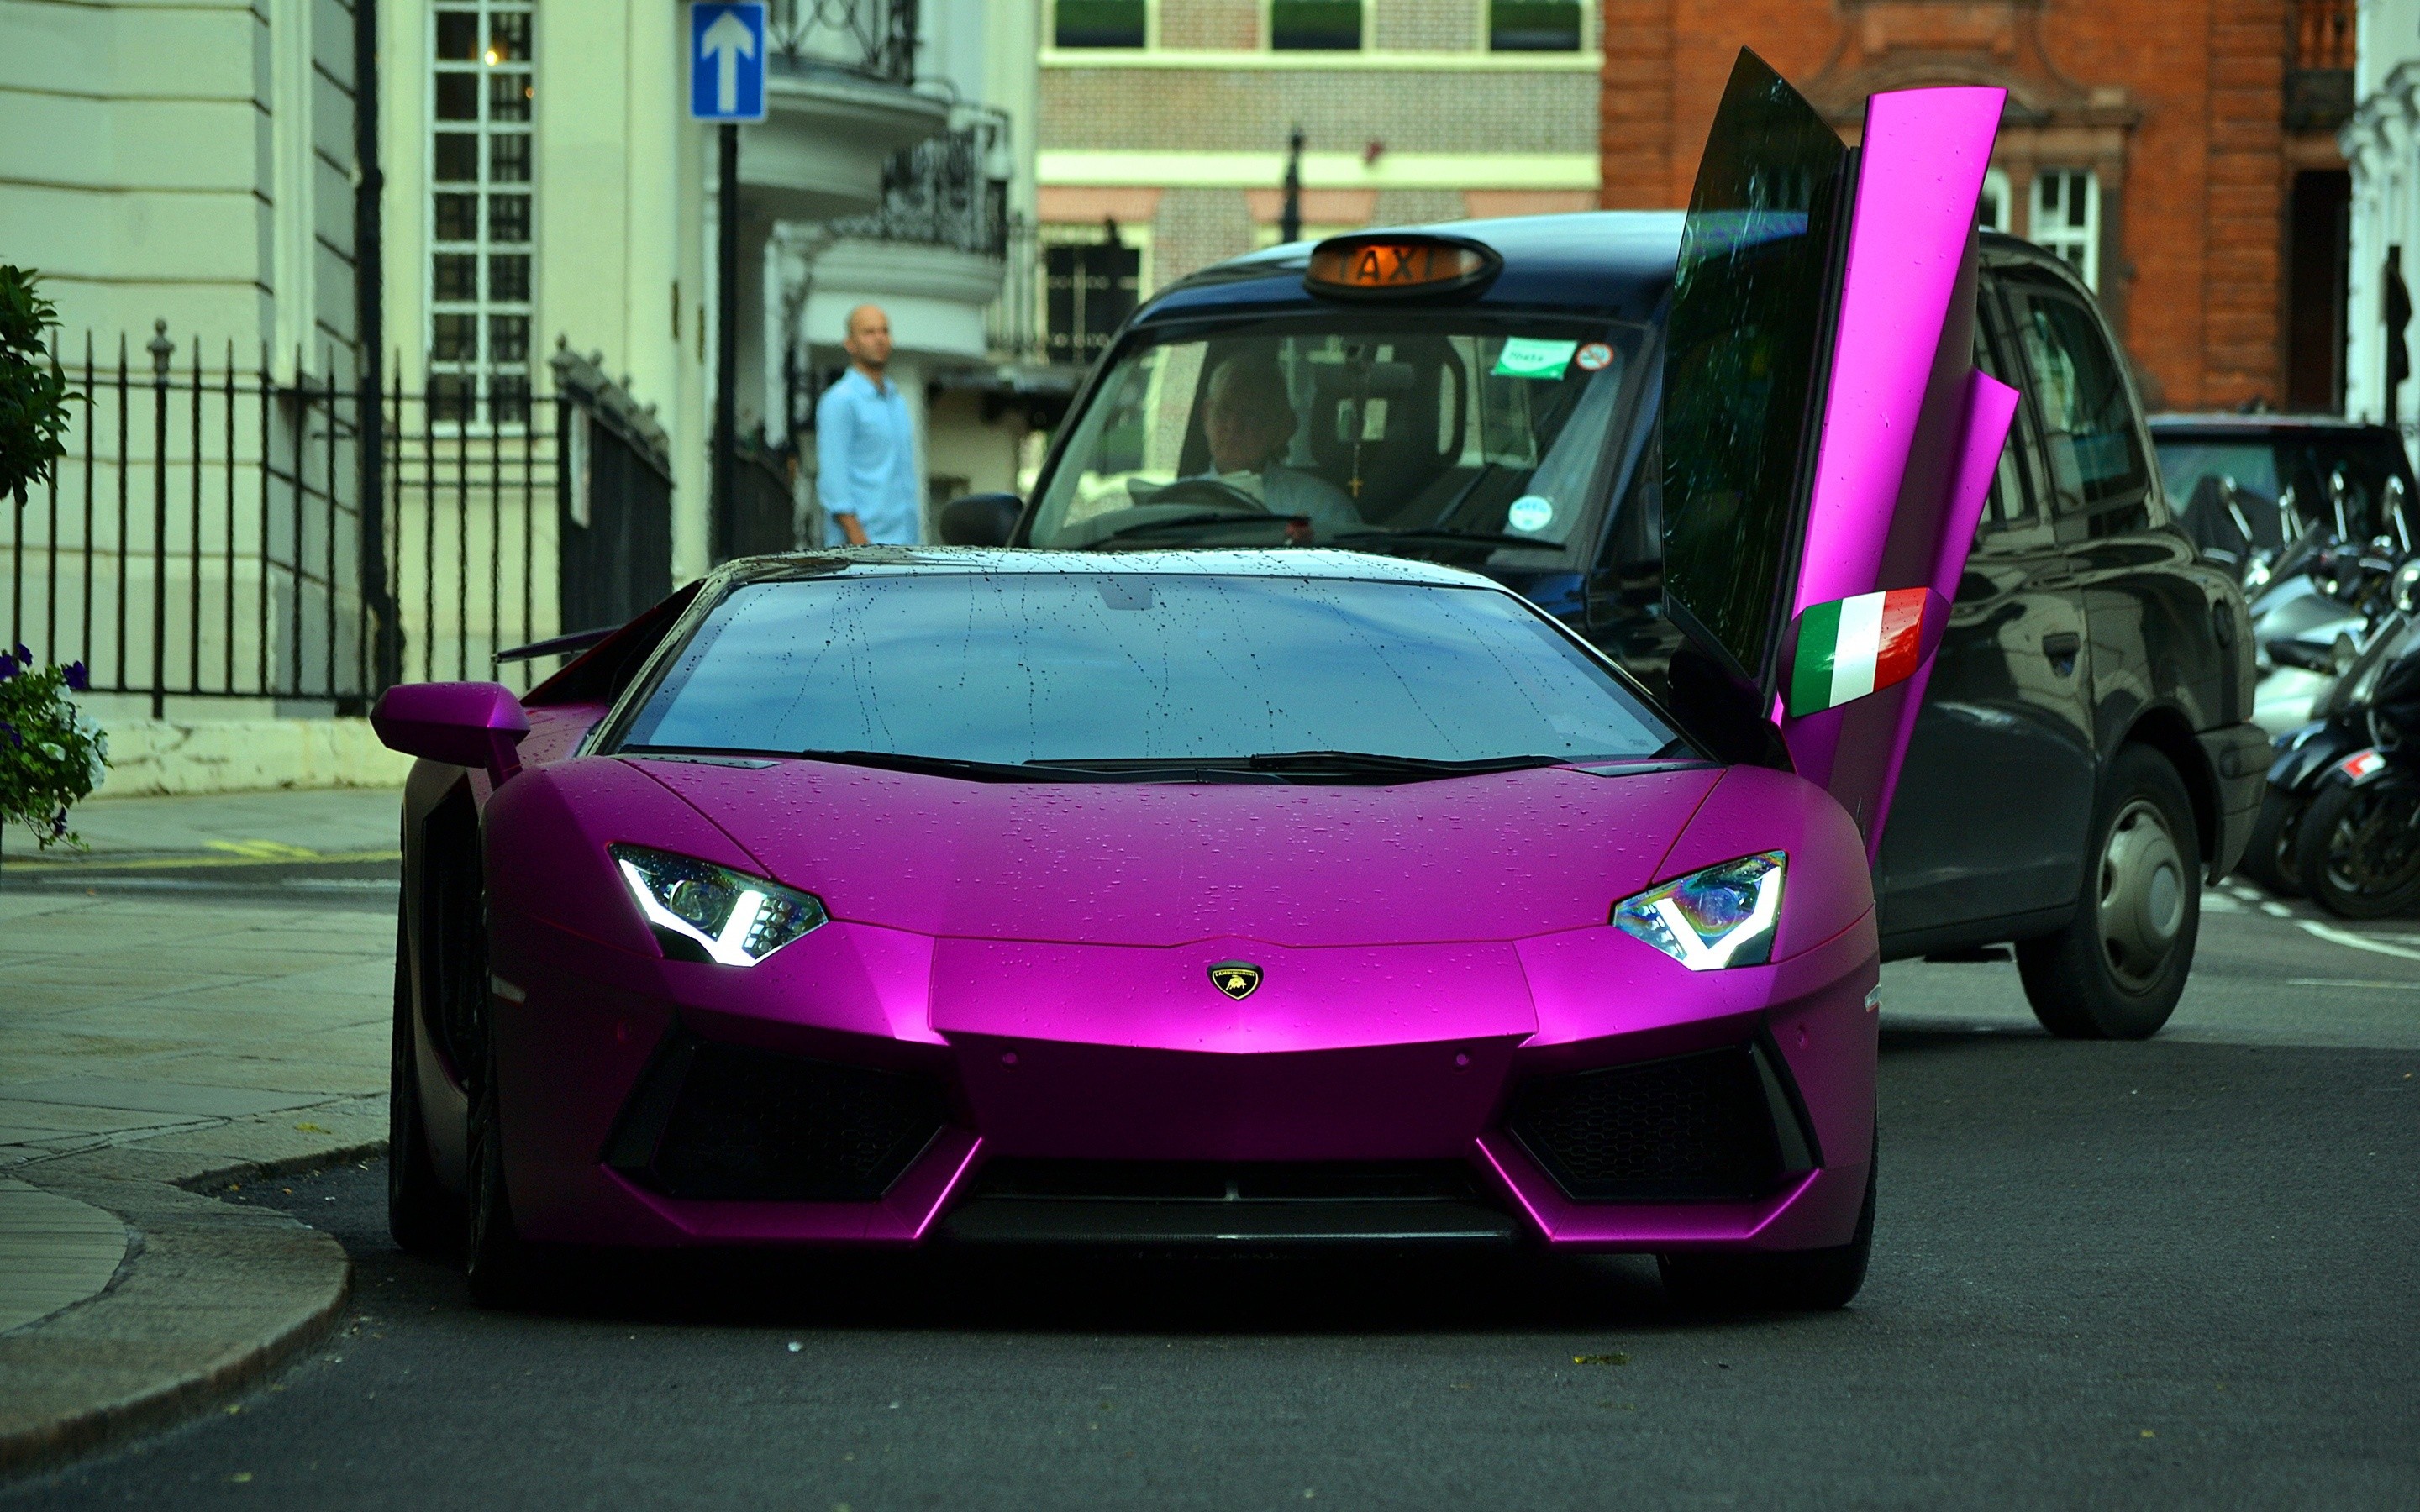 Lamborghini Aventador in pink wrap.